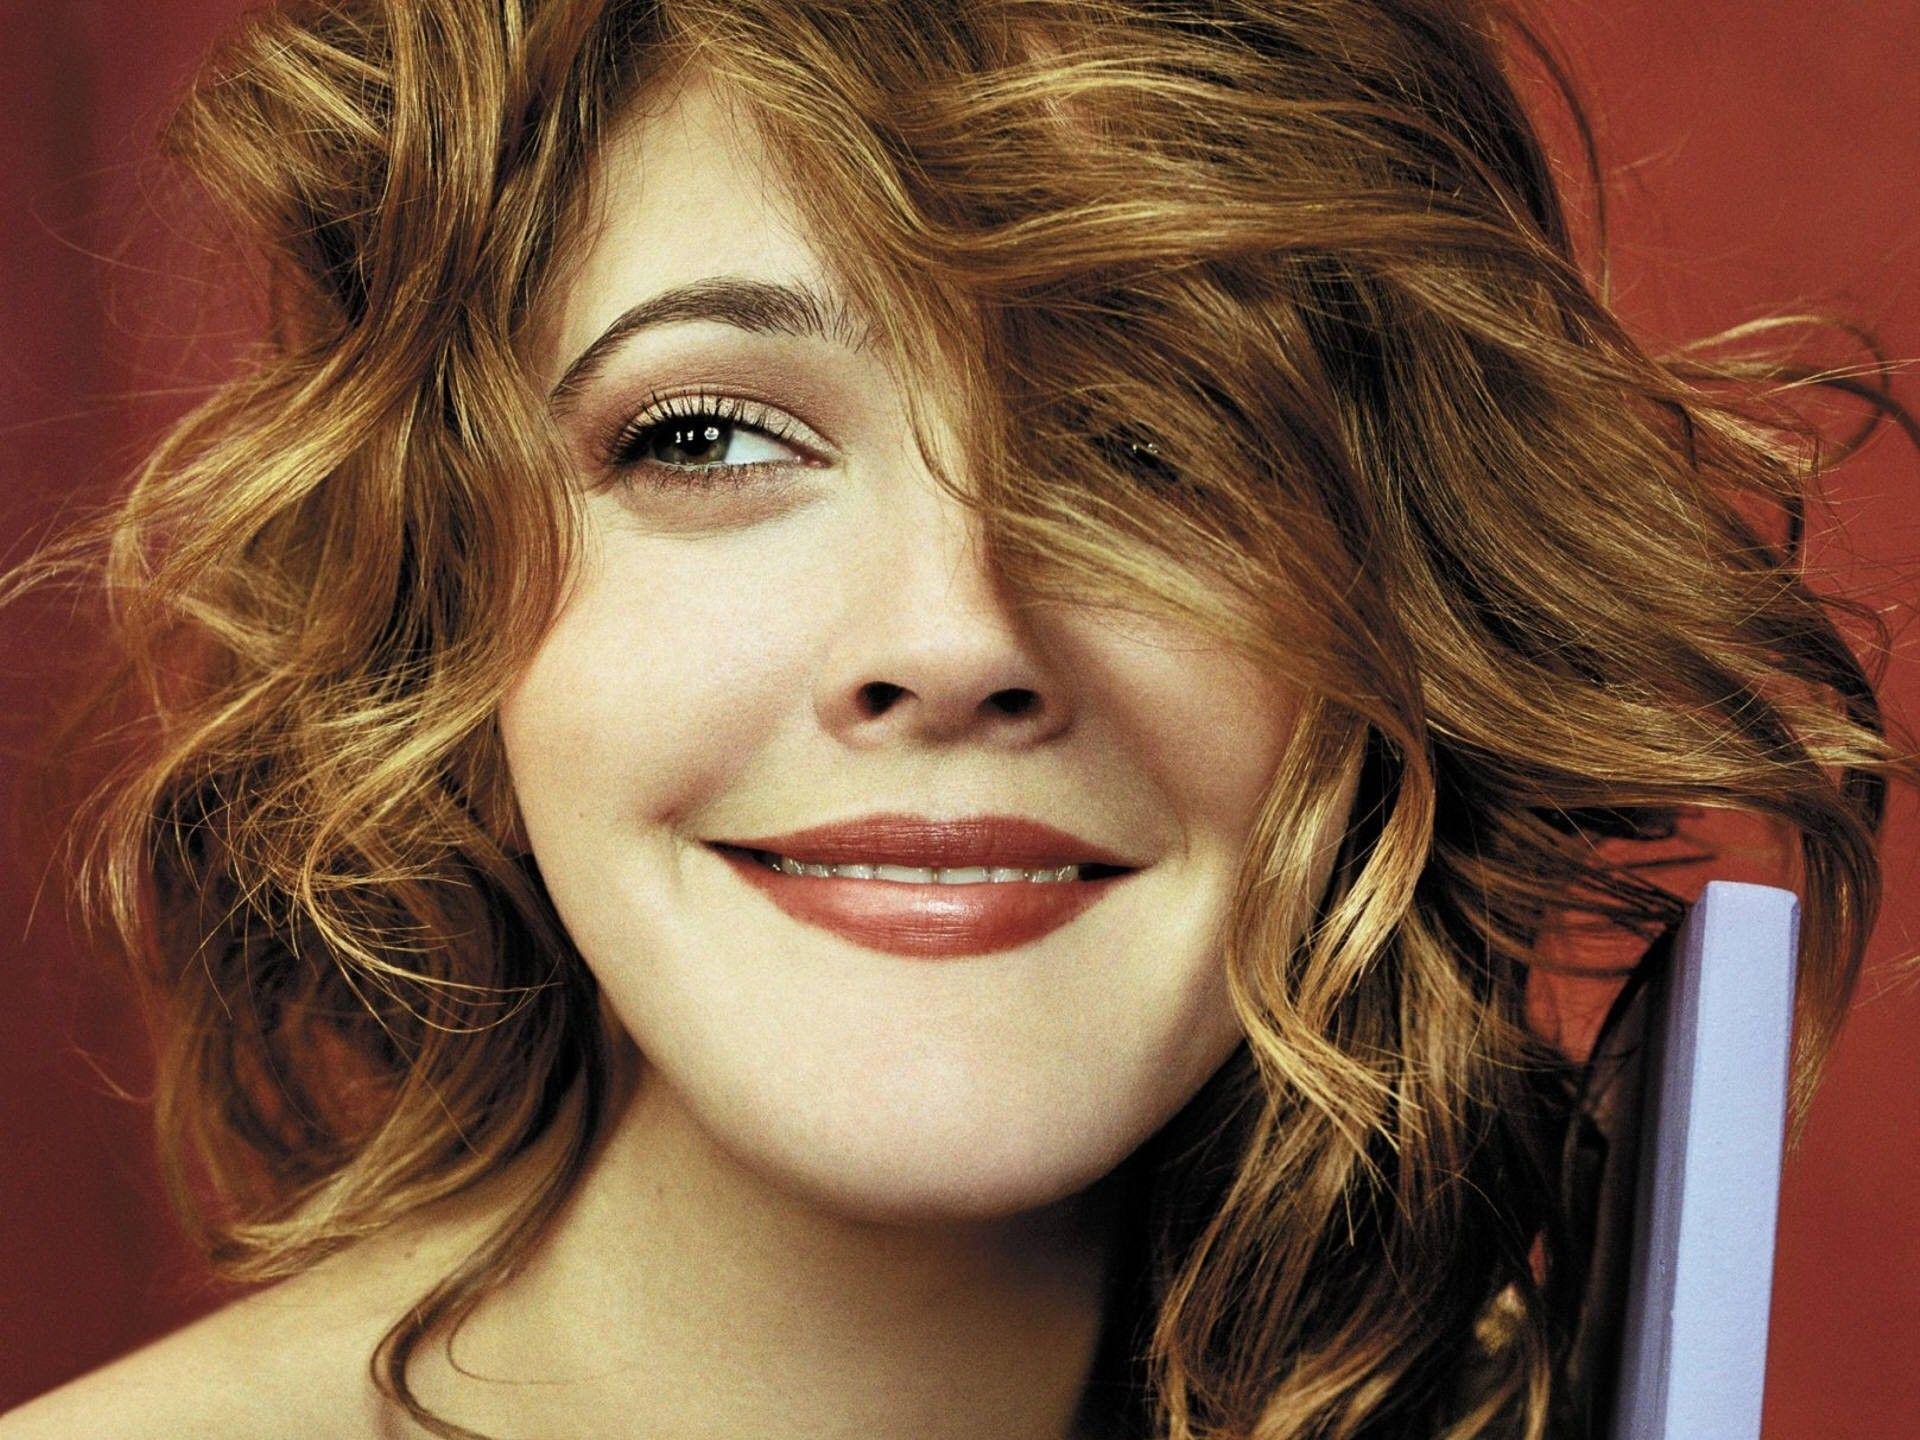 Drew Barrymore Wallpaper. Free Download HD Beautiful Actress Image